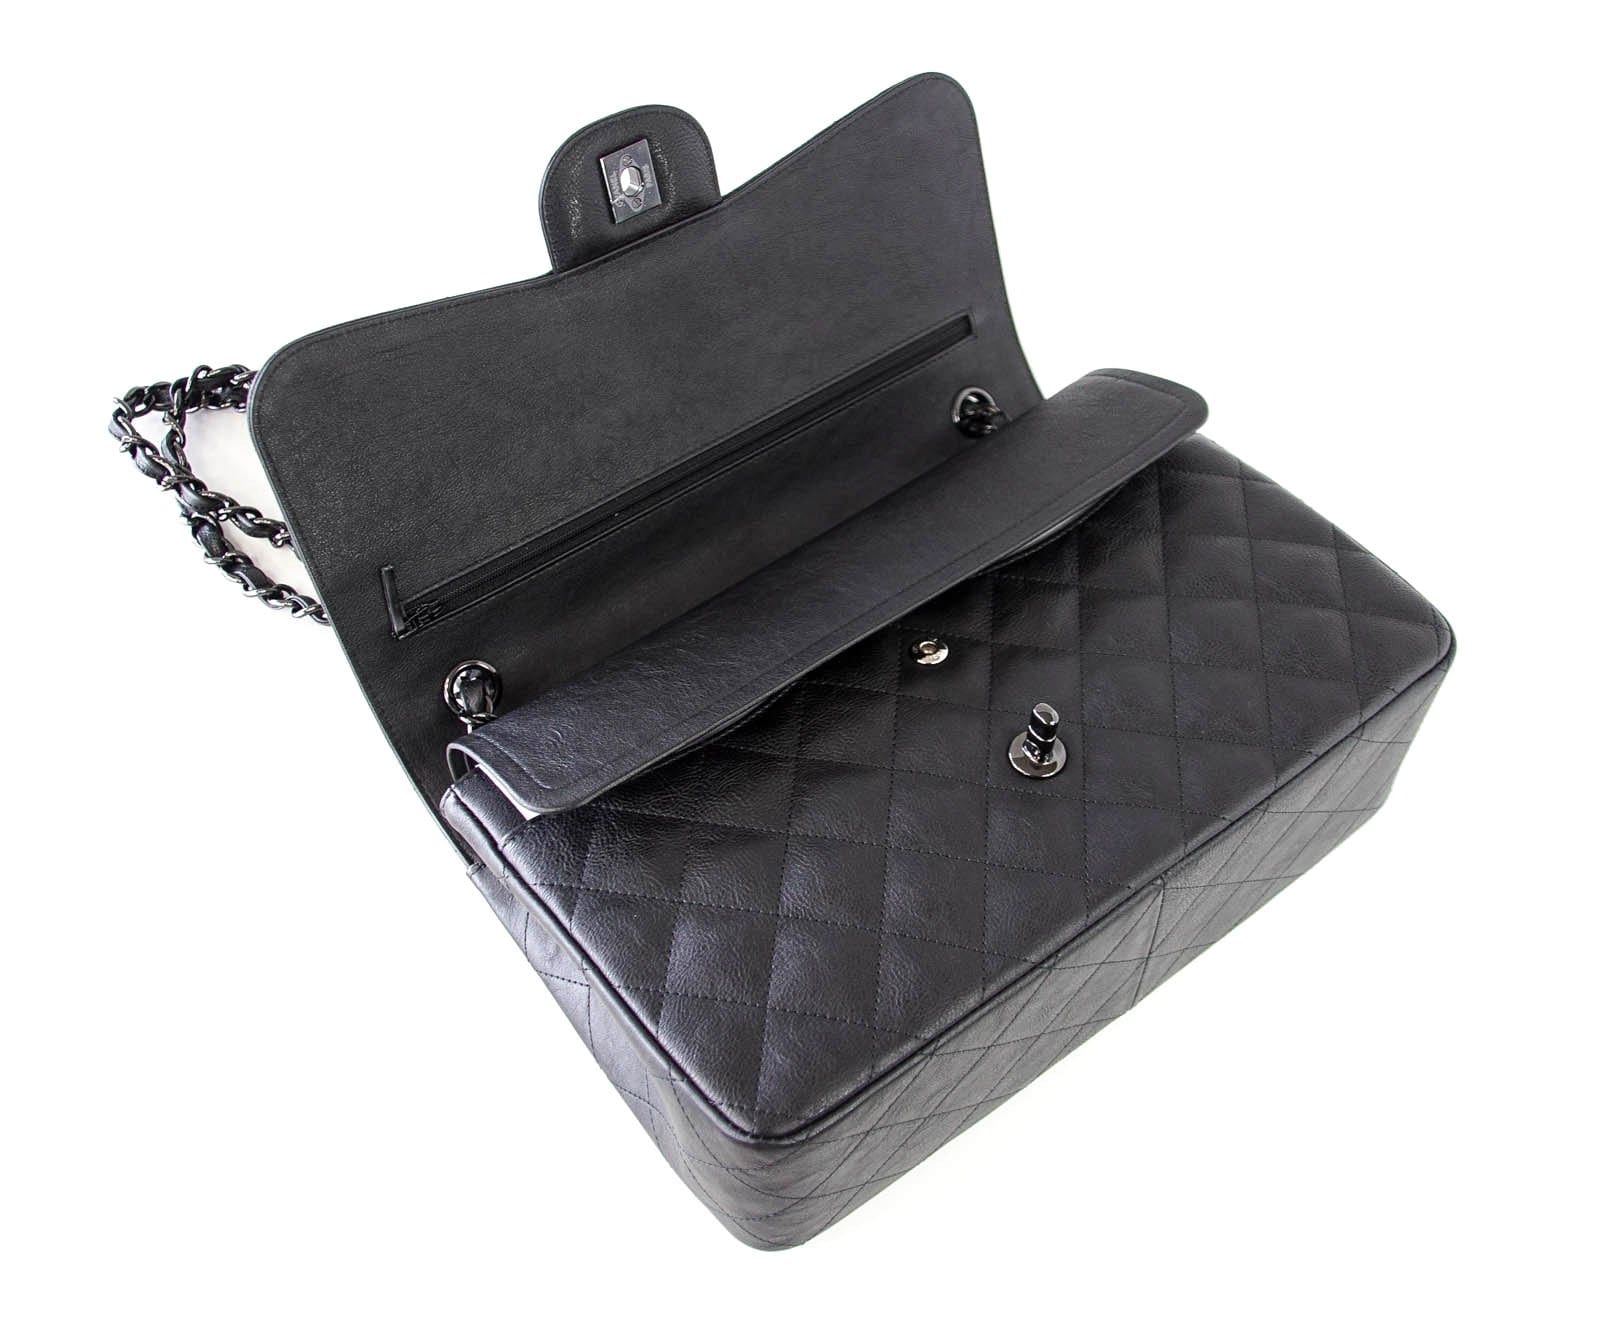 jumbo chanel handbag black